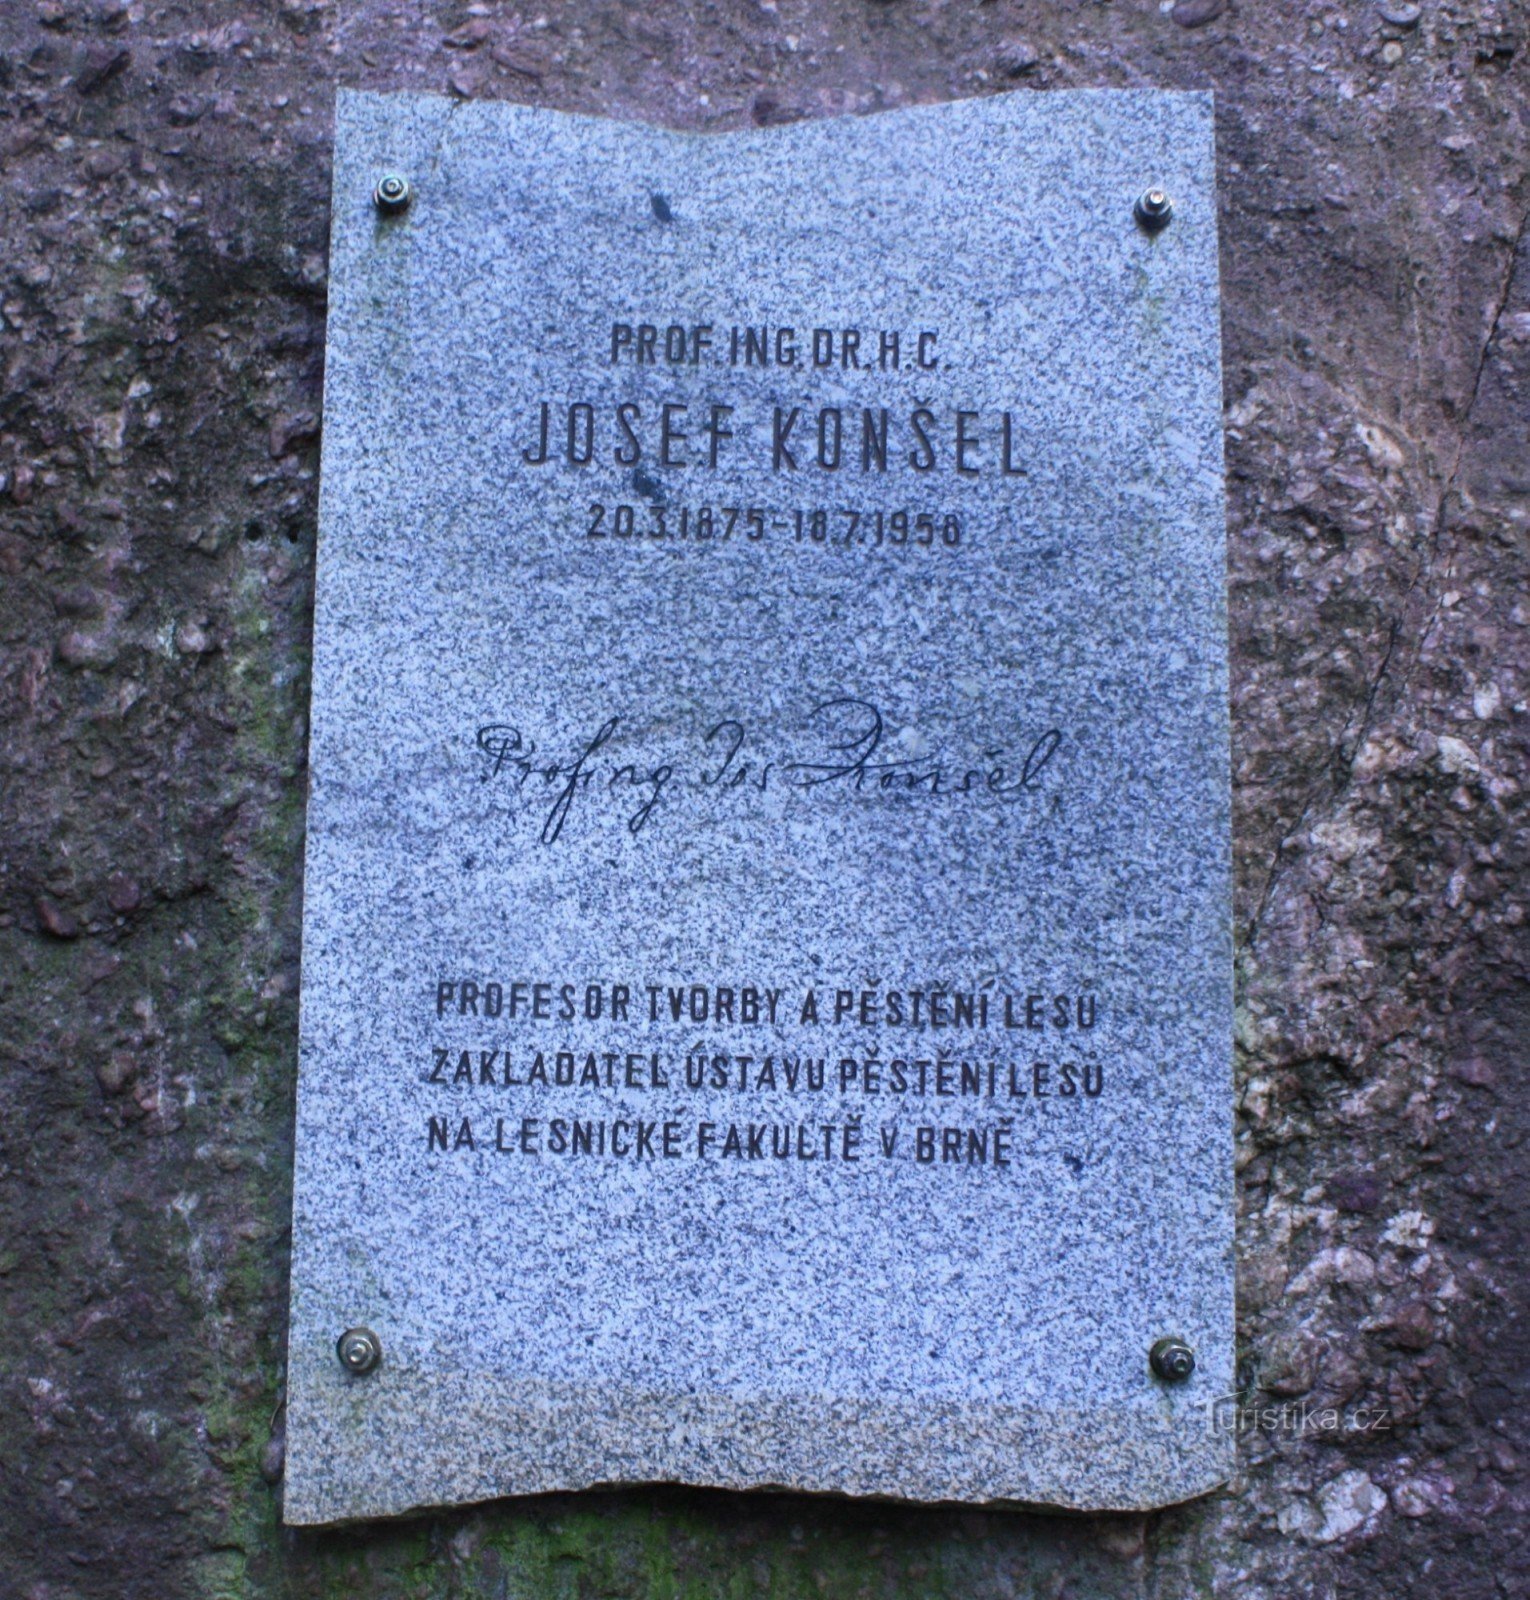 Josef Konšel emlékműve